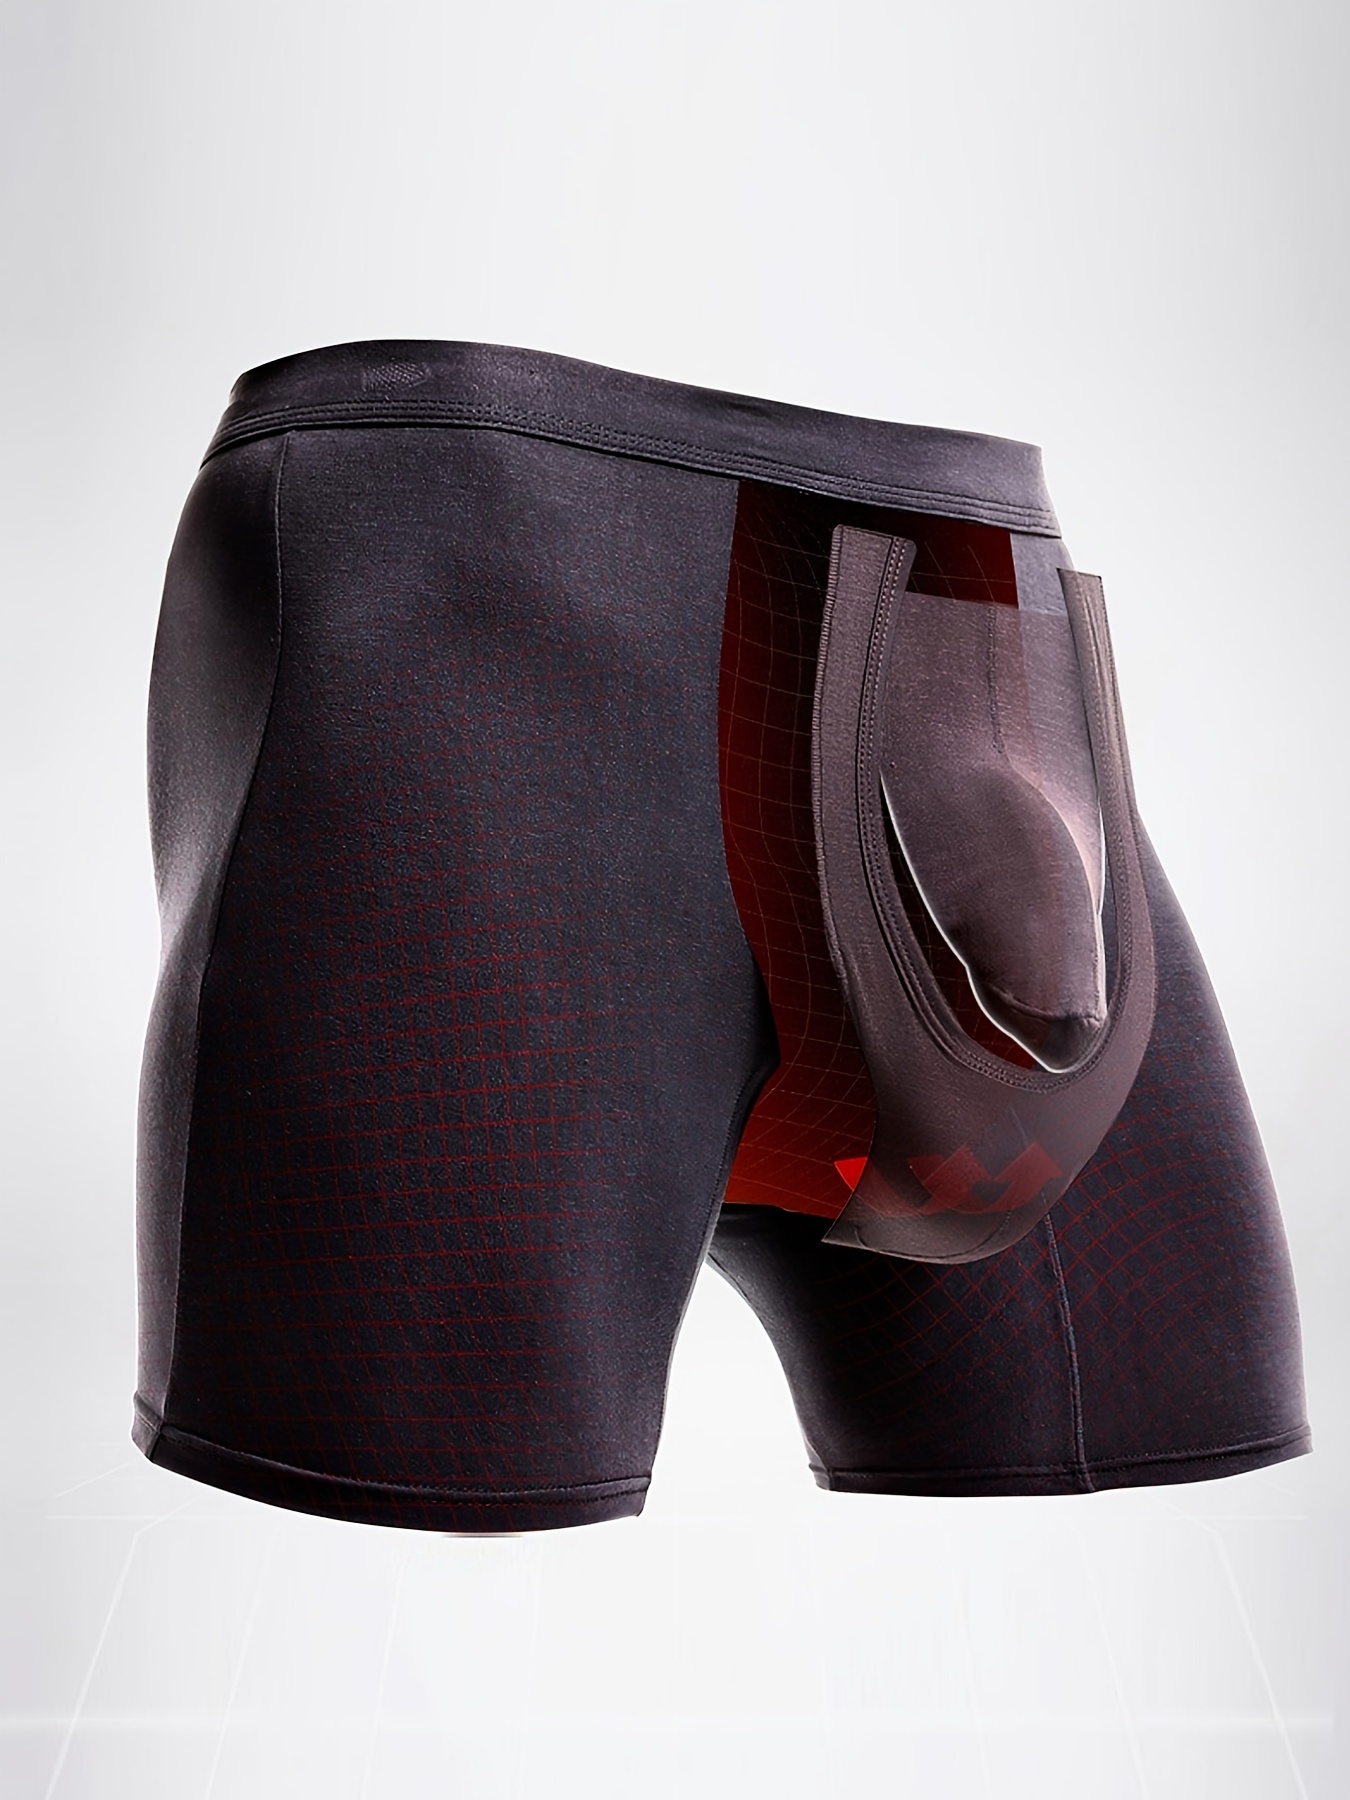 The Tool Kit // Ball Hammock® Pouch Underwear Briefs (2XL